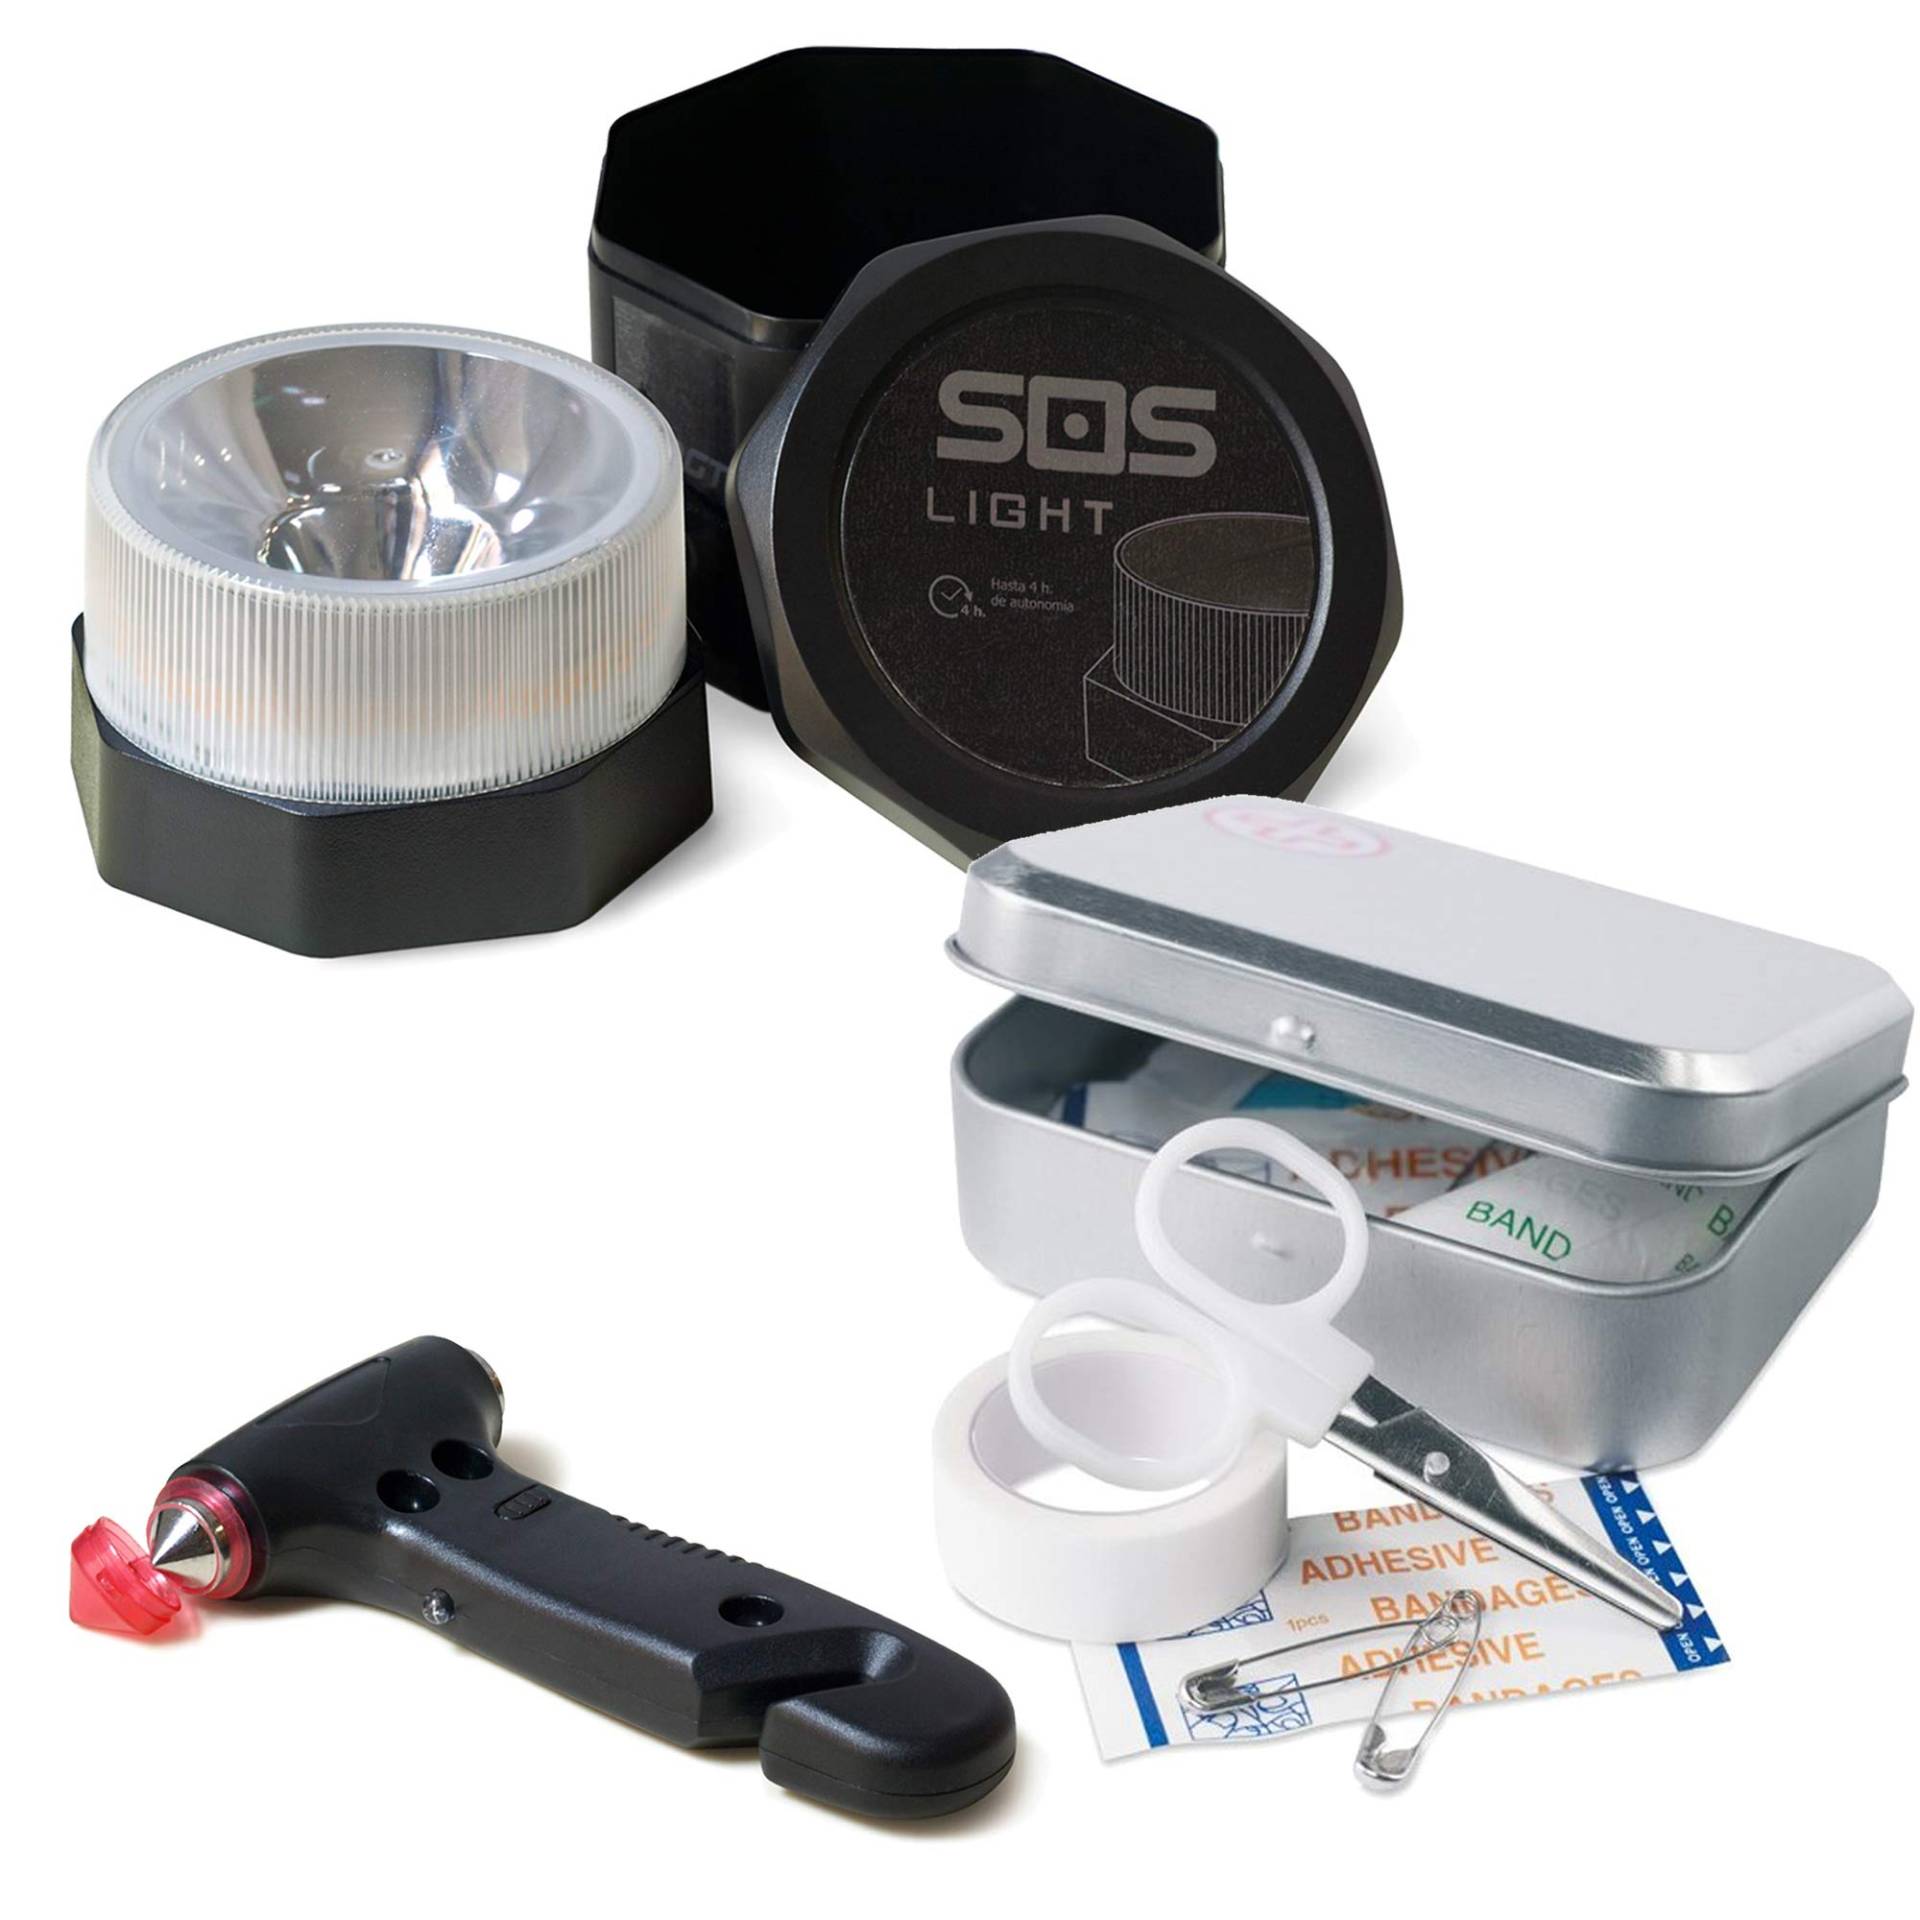 SOS LIGHT PK2691 Notfallhammer Pack: Fensterbrecher + Gurtschneider + Geschenk, Box Kit Erste Hilfe von SOS LIGHT